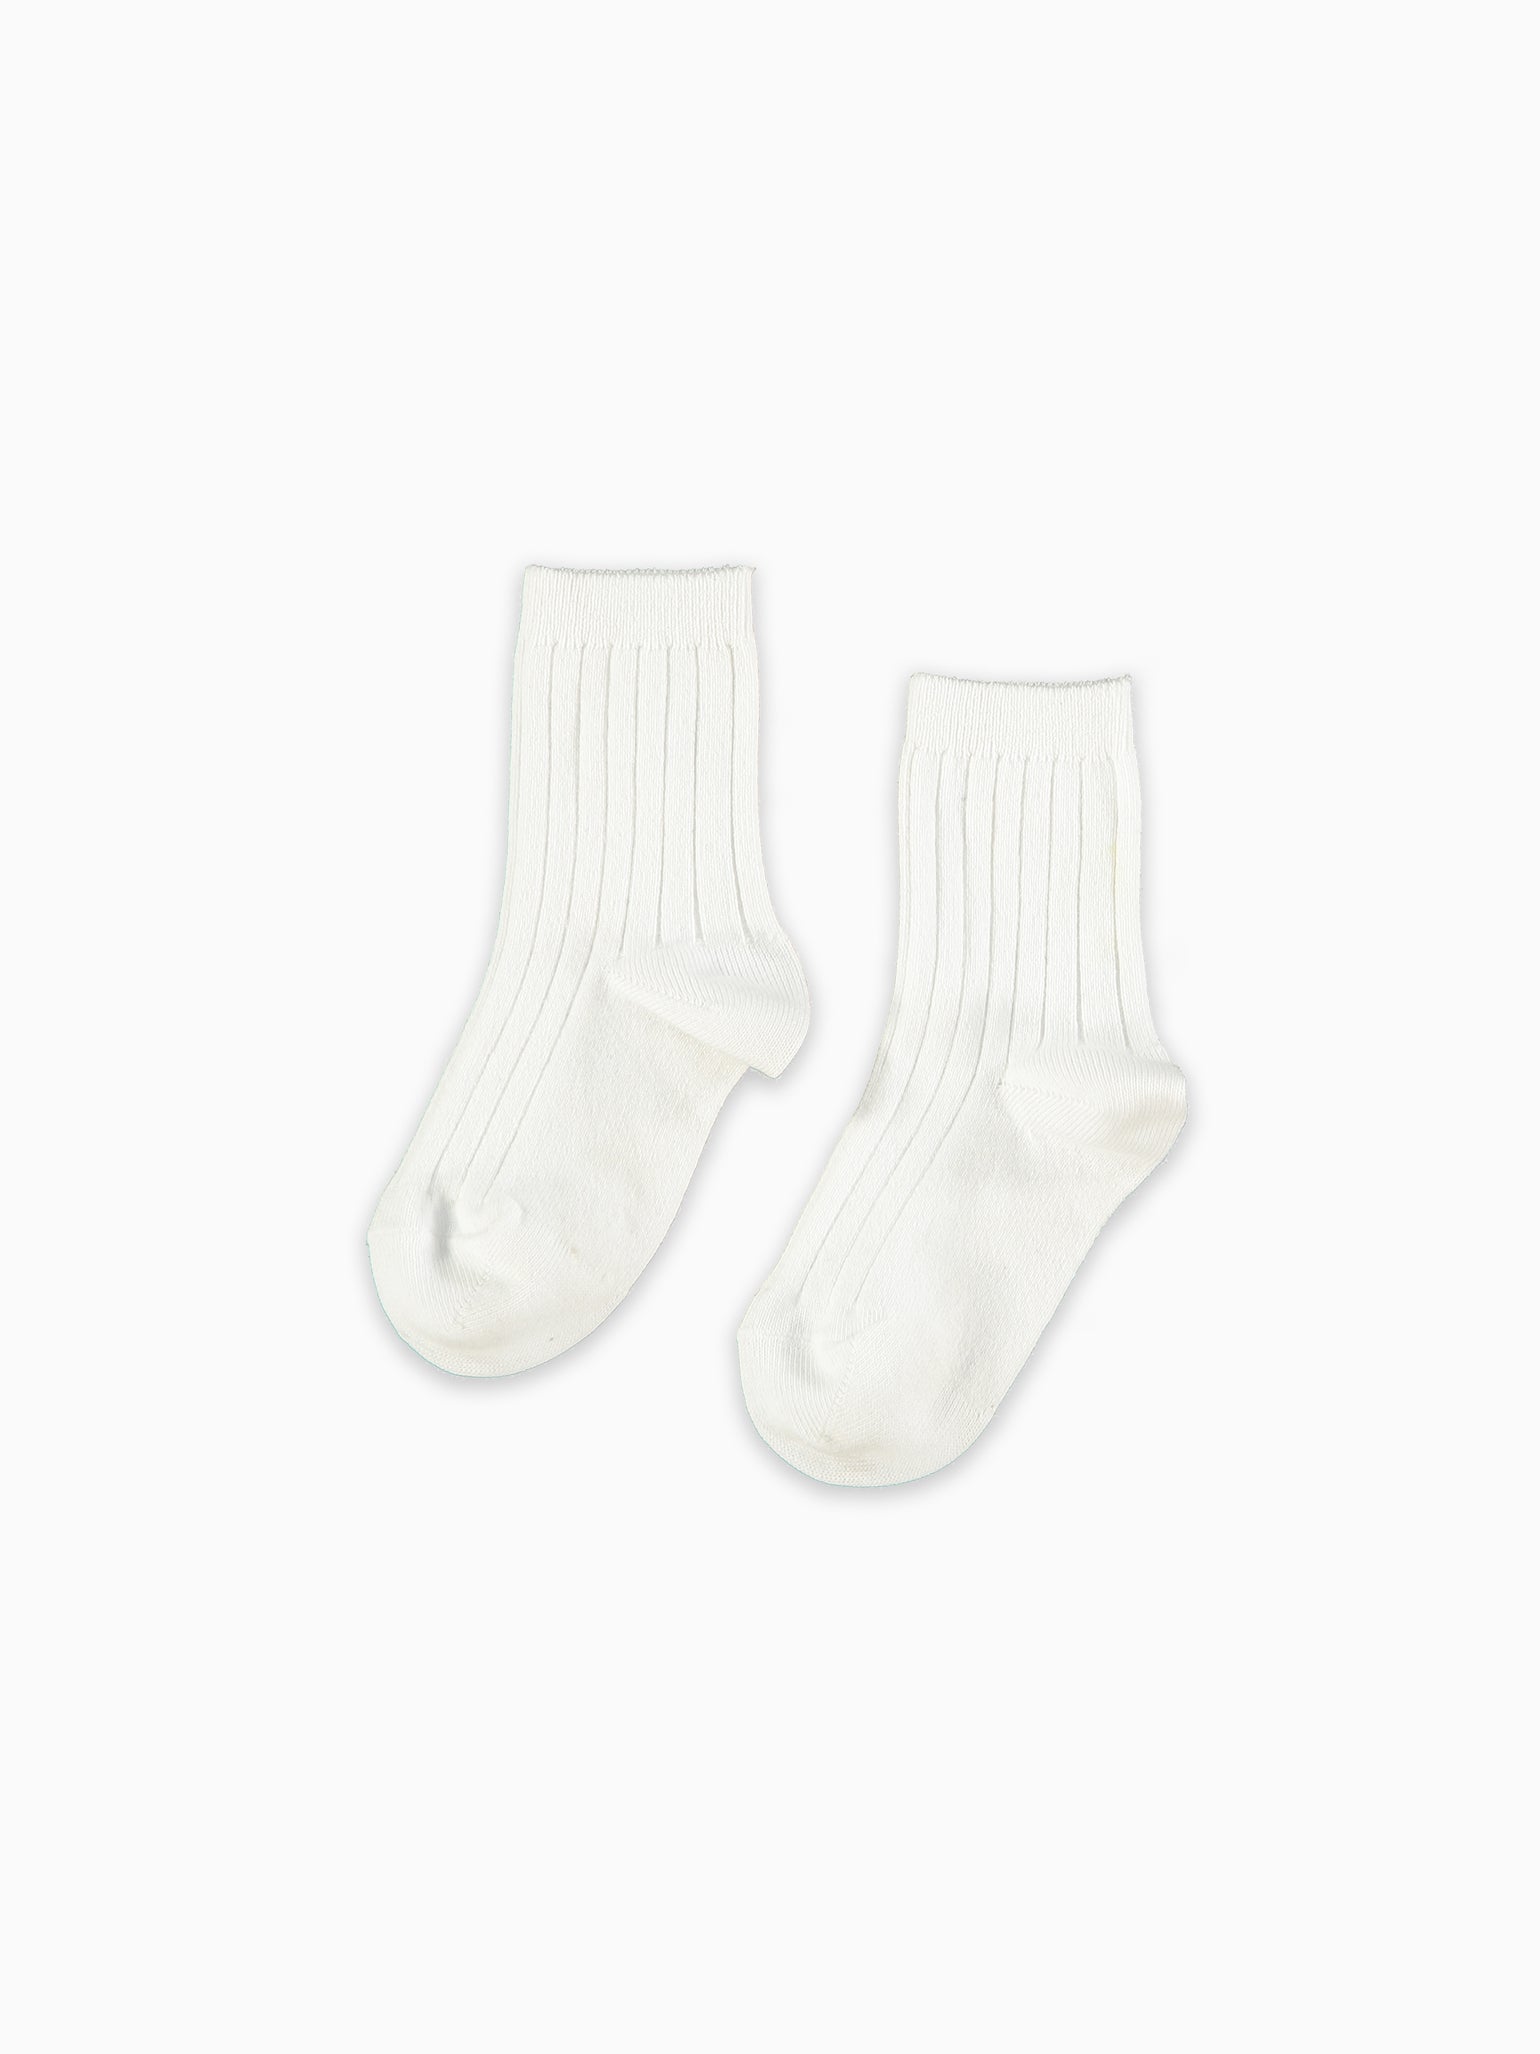 White Mix Ribbed Short Kids Socks Set